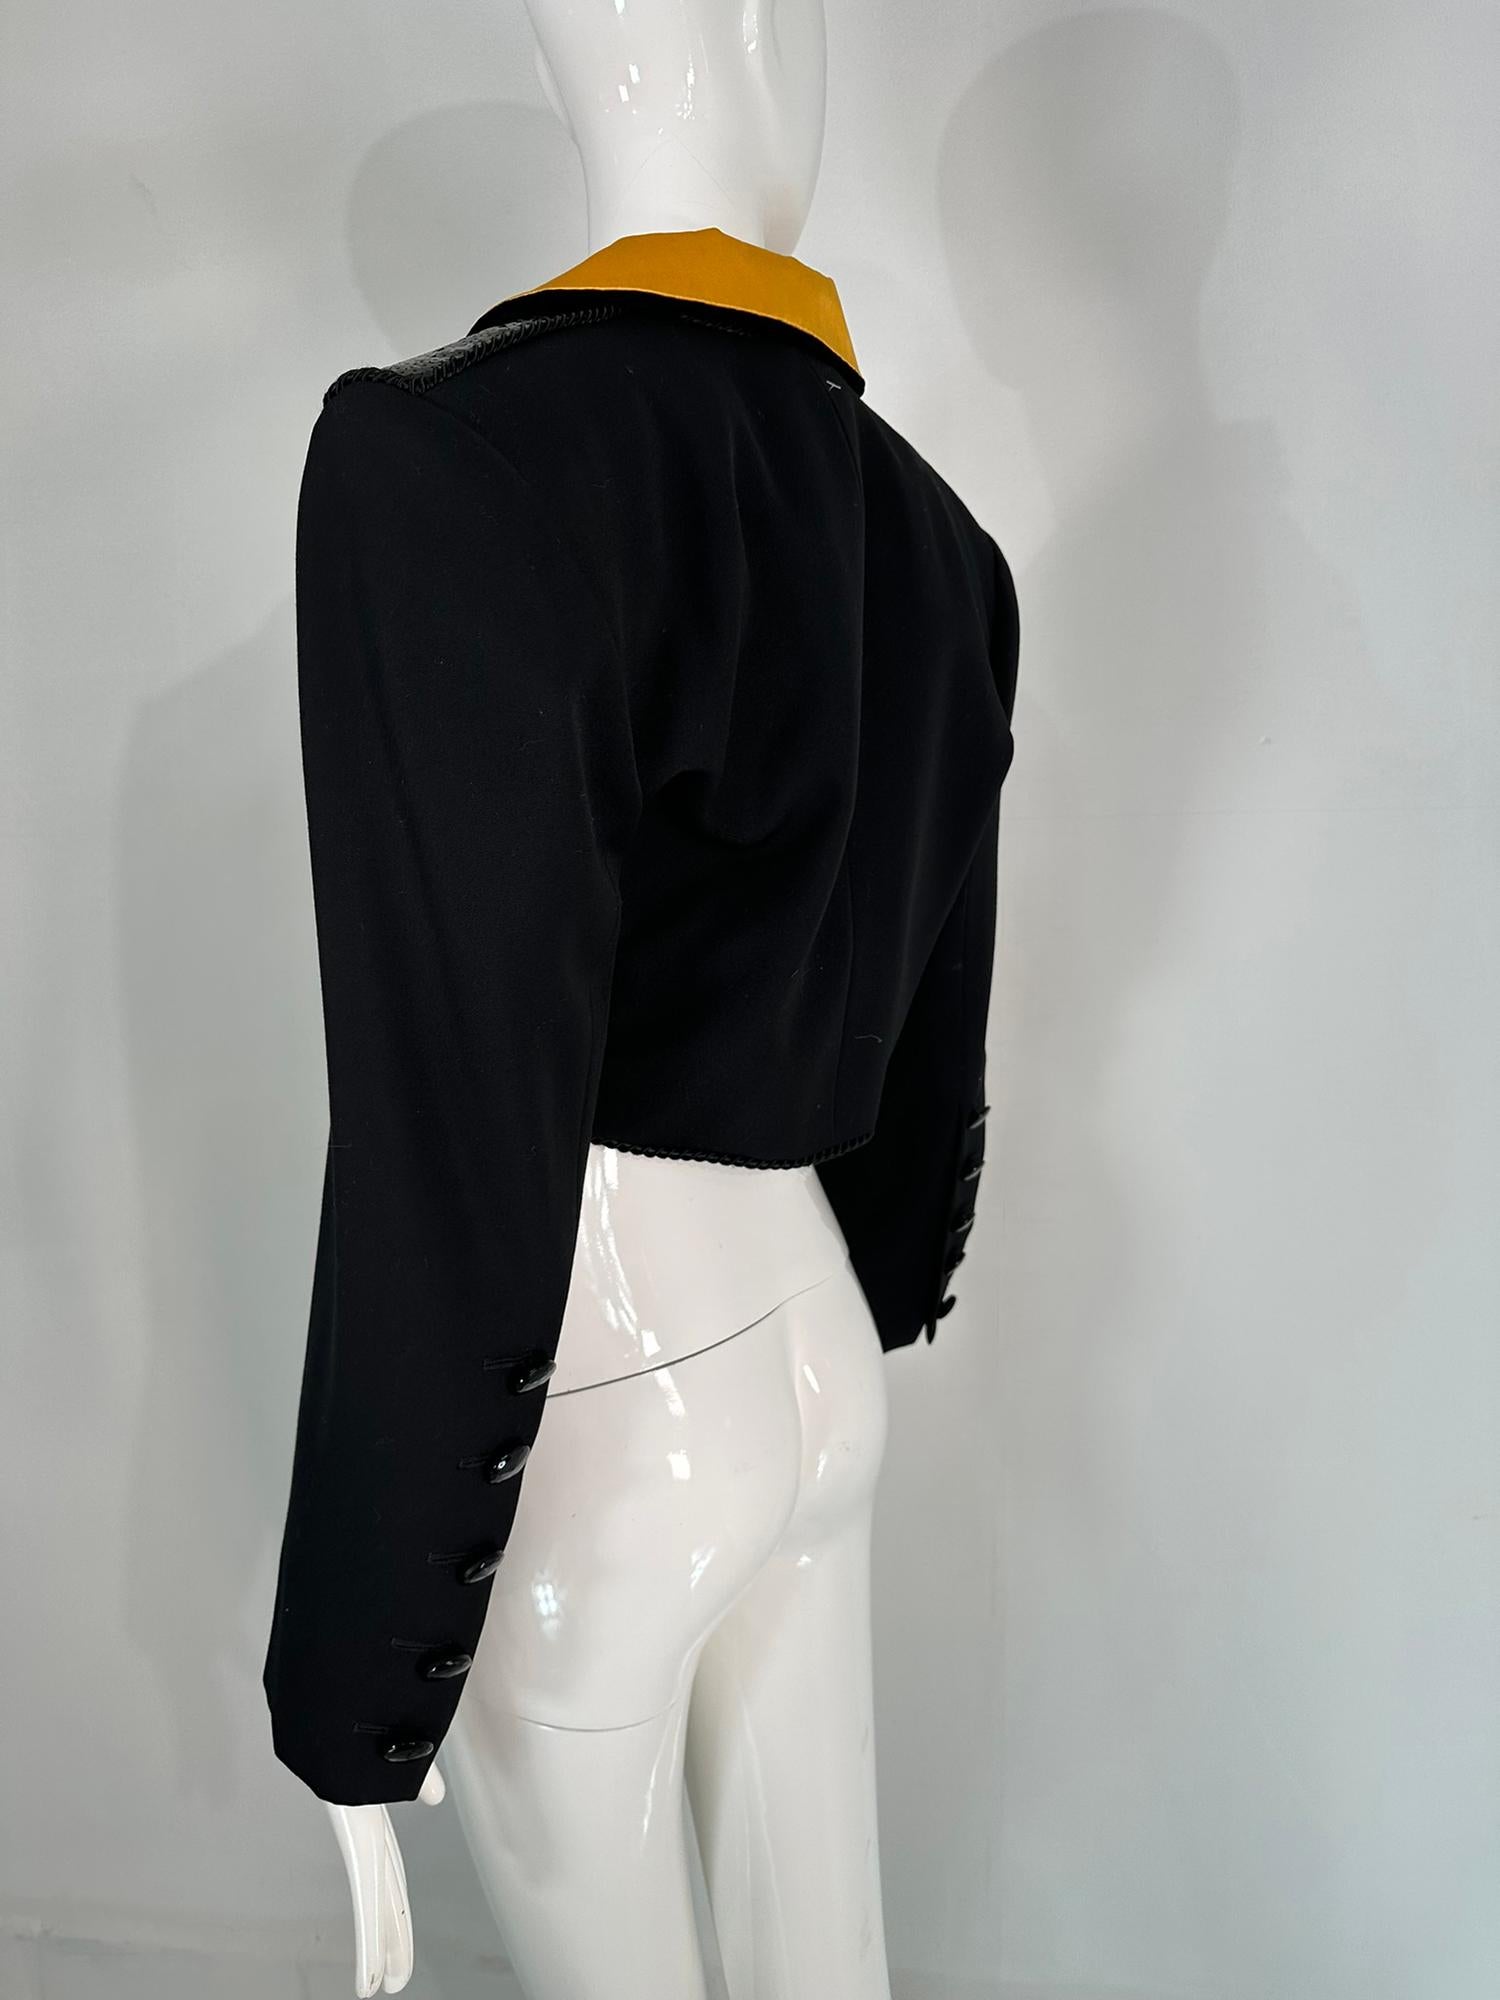 Yves Saint Laurent Rive Gauche Black Sequin Yellow Satin Cropped Jacket 1990s For Sale 3